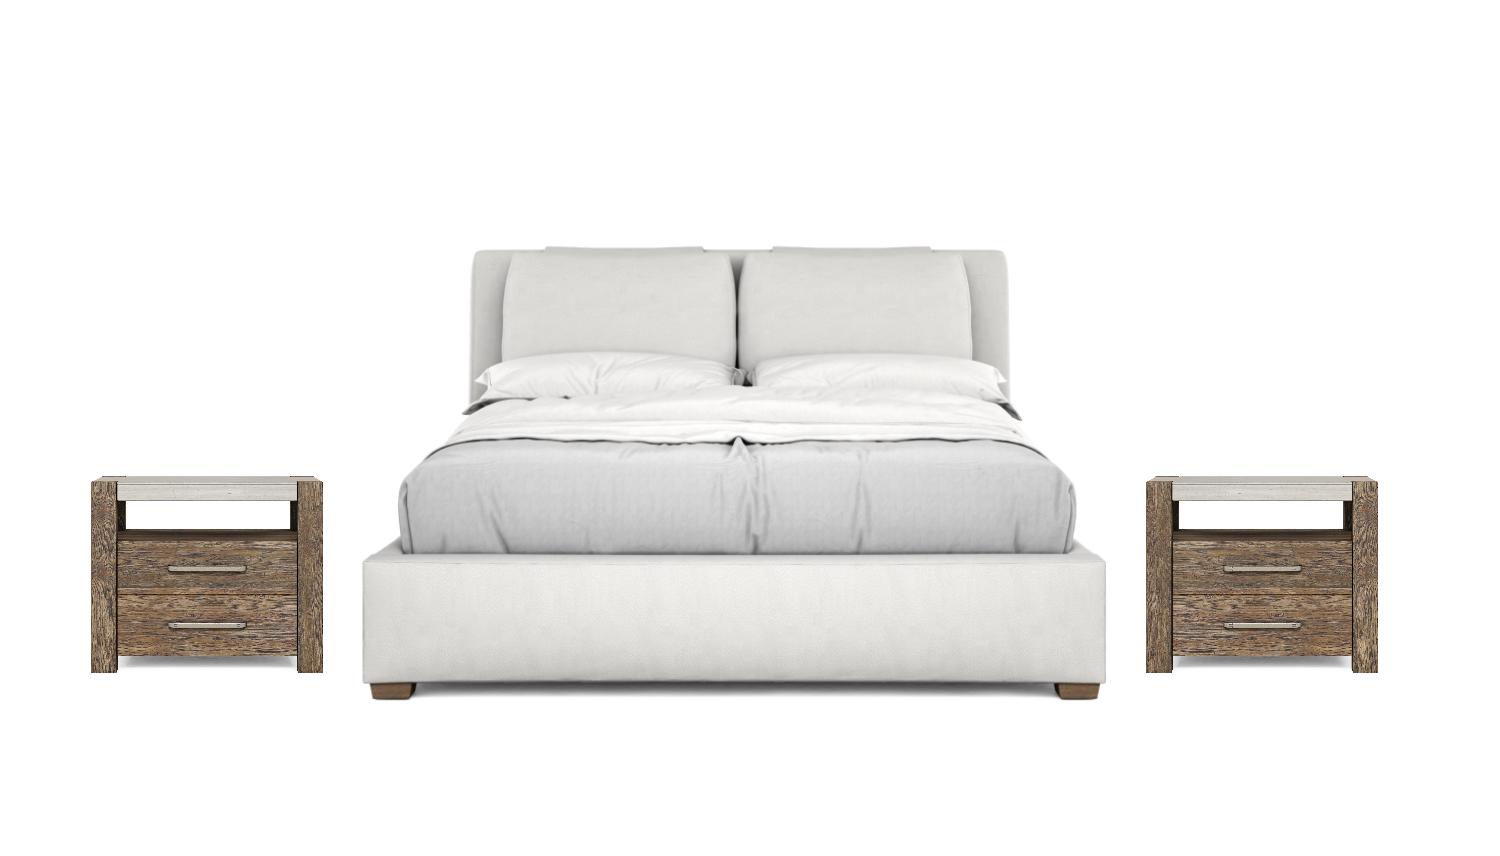 Modern, Transitional Platform Bedroom Set Stockyard 284125-2303-WH-2N-3PCS in Light Gray, White Fabric